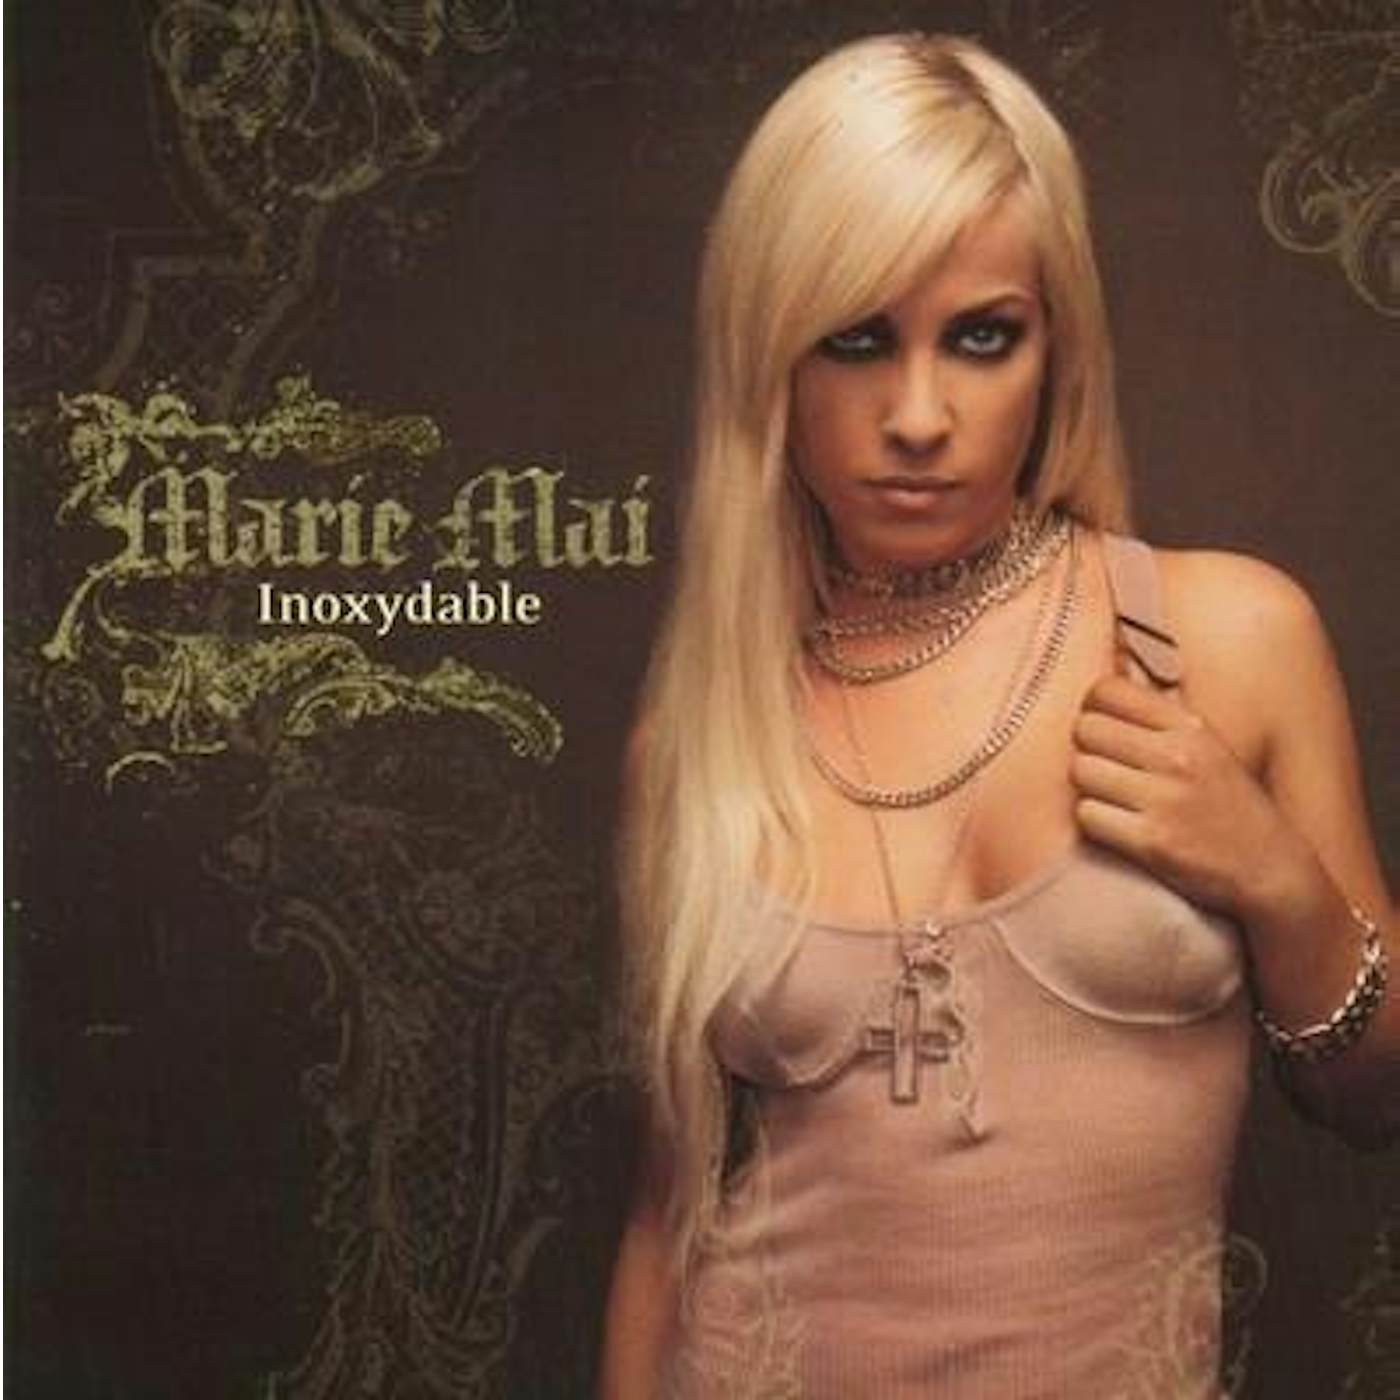 Marie-Mai INOXYDABLE CD